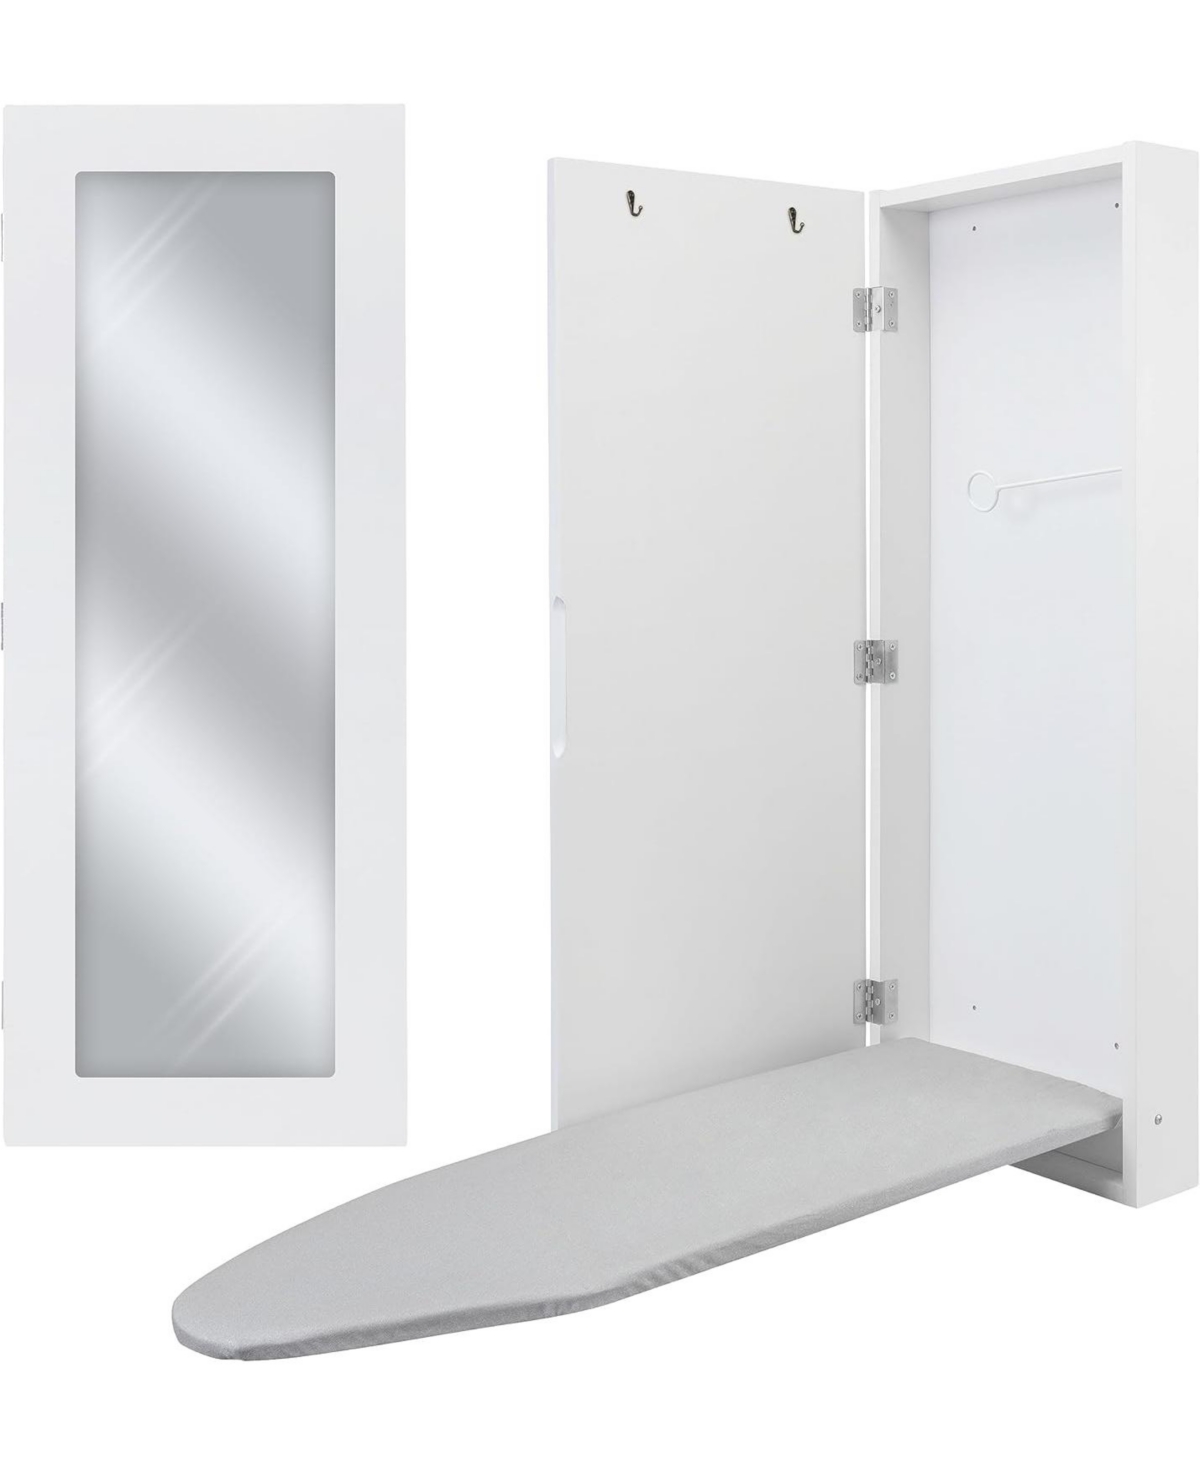 Ironing Board (Left Side Door) w/Mirror, Wall Mount Iron Board - White